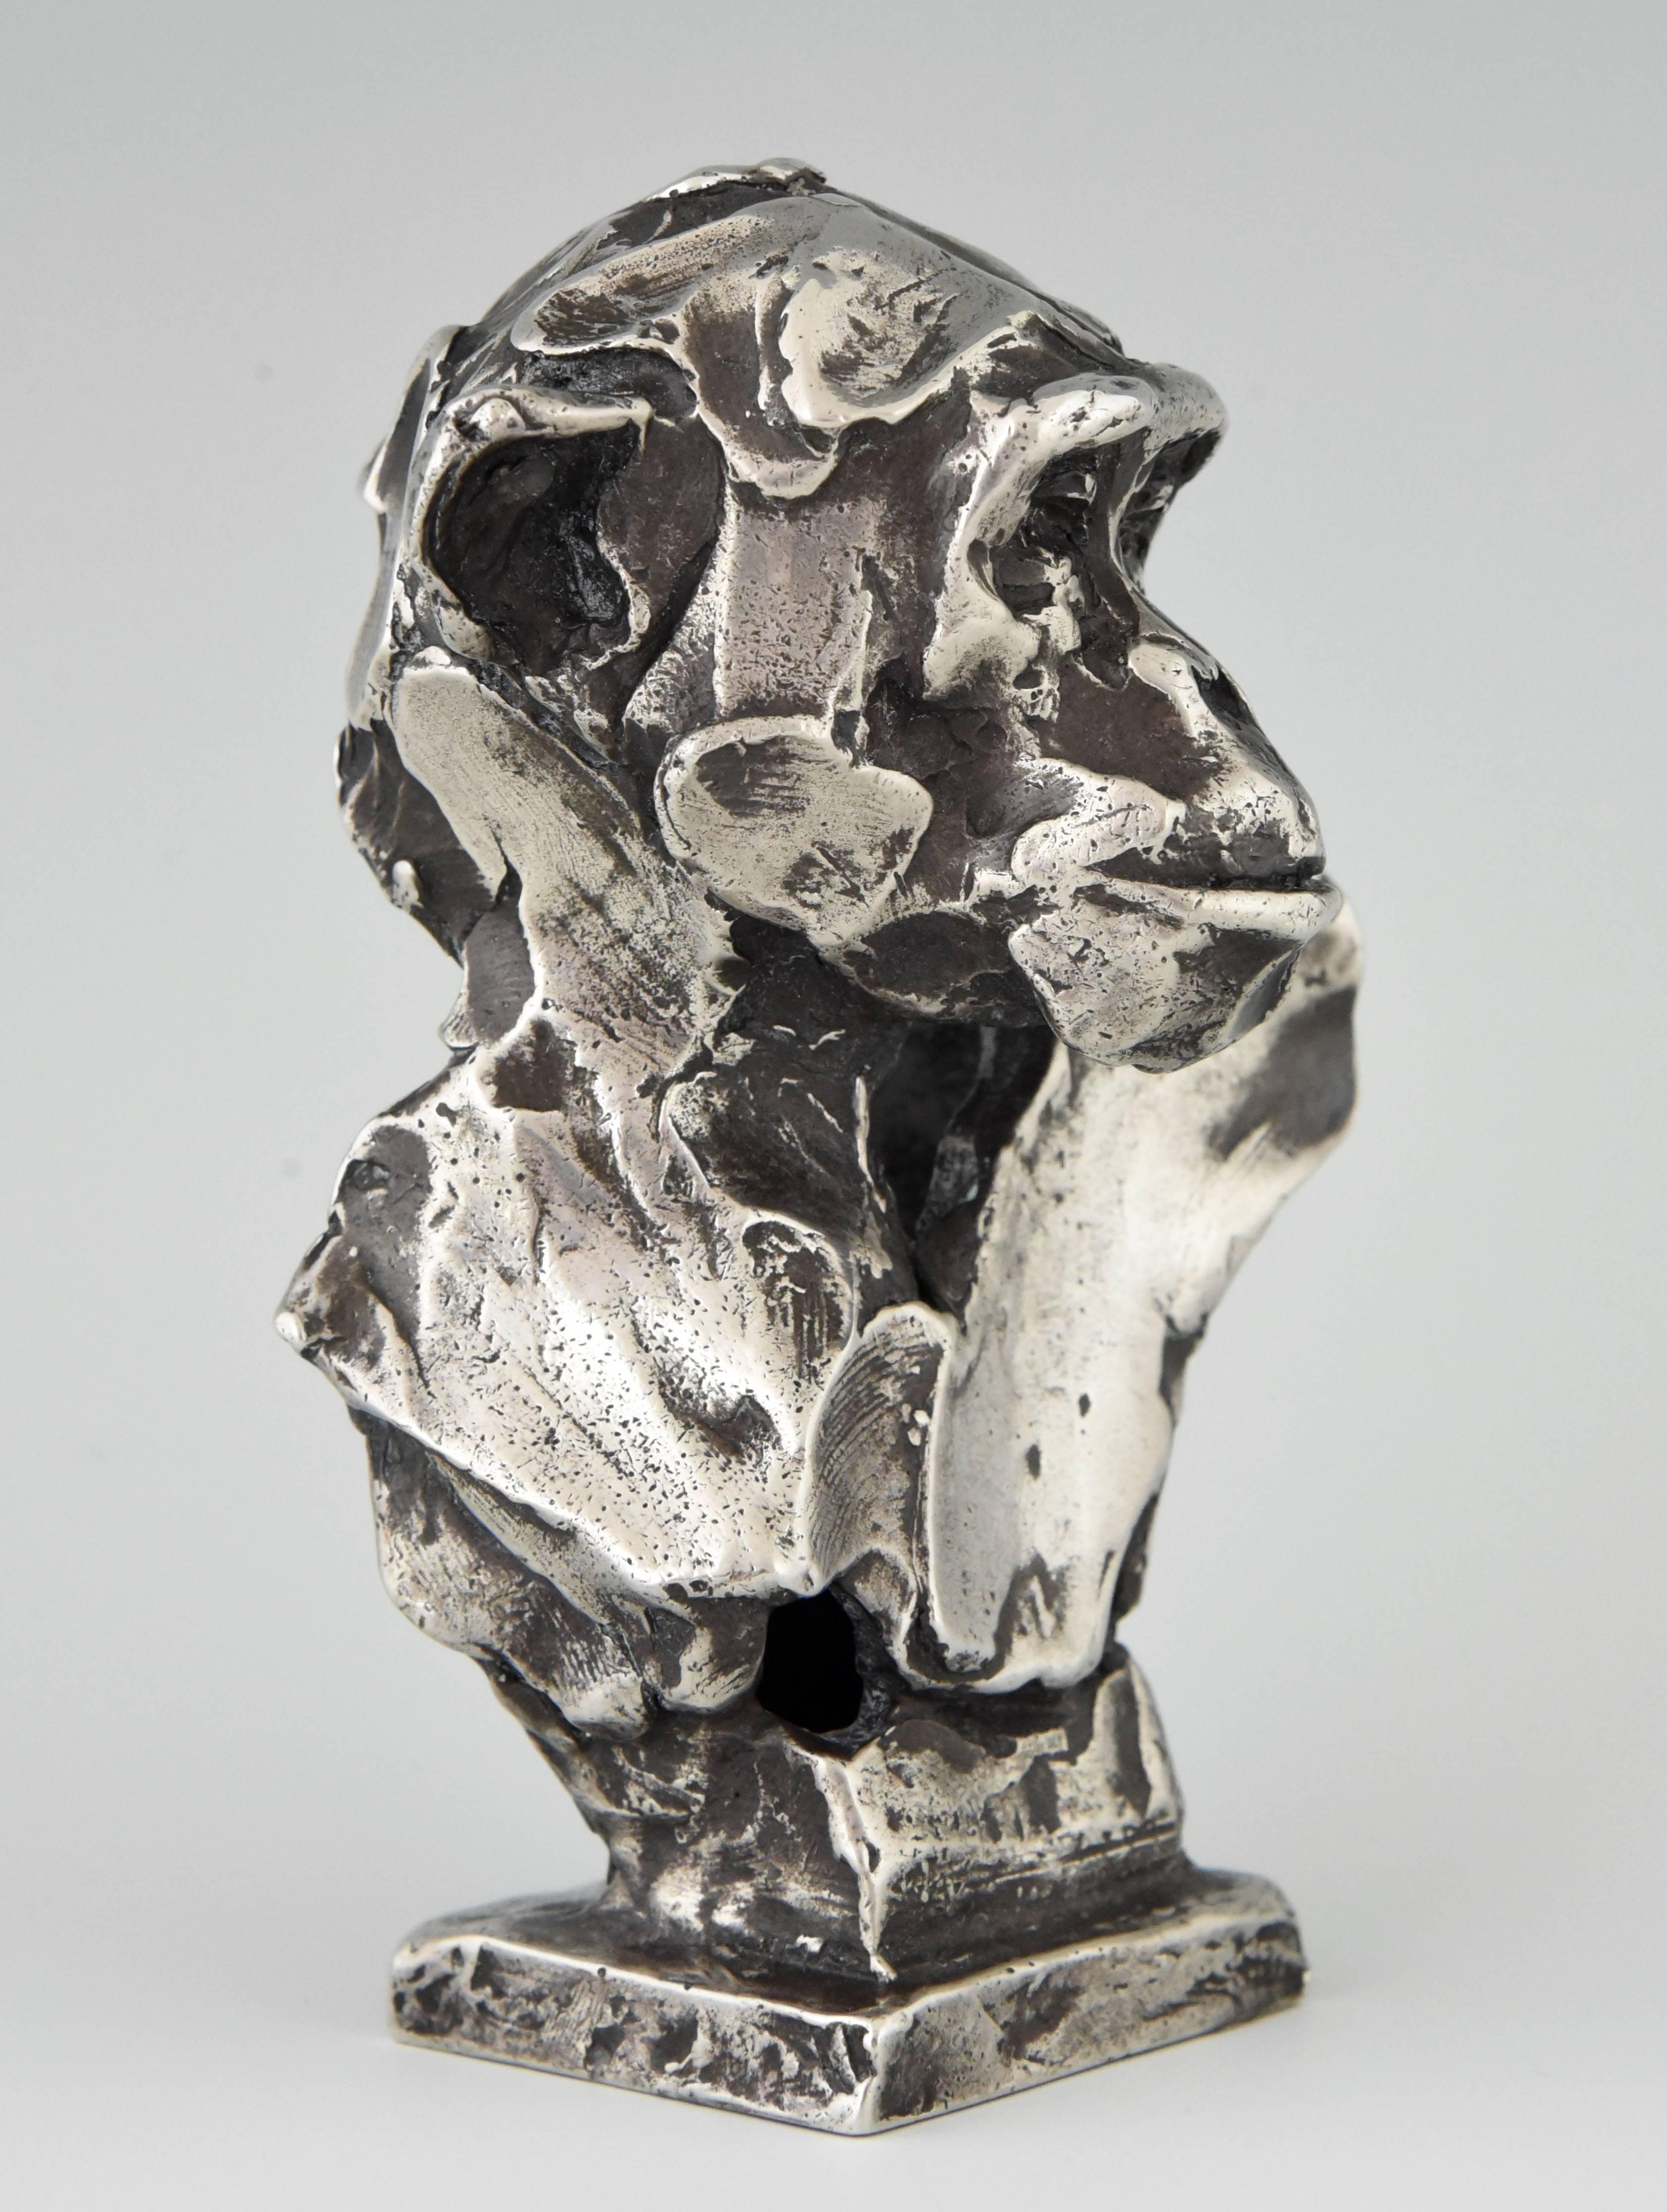 Cast Sterling Silver Sculpture of a Chimpanzee Monkey by Erwin Peeters